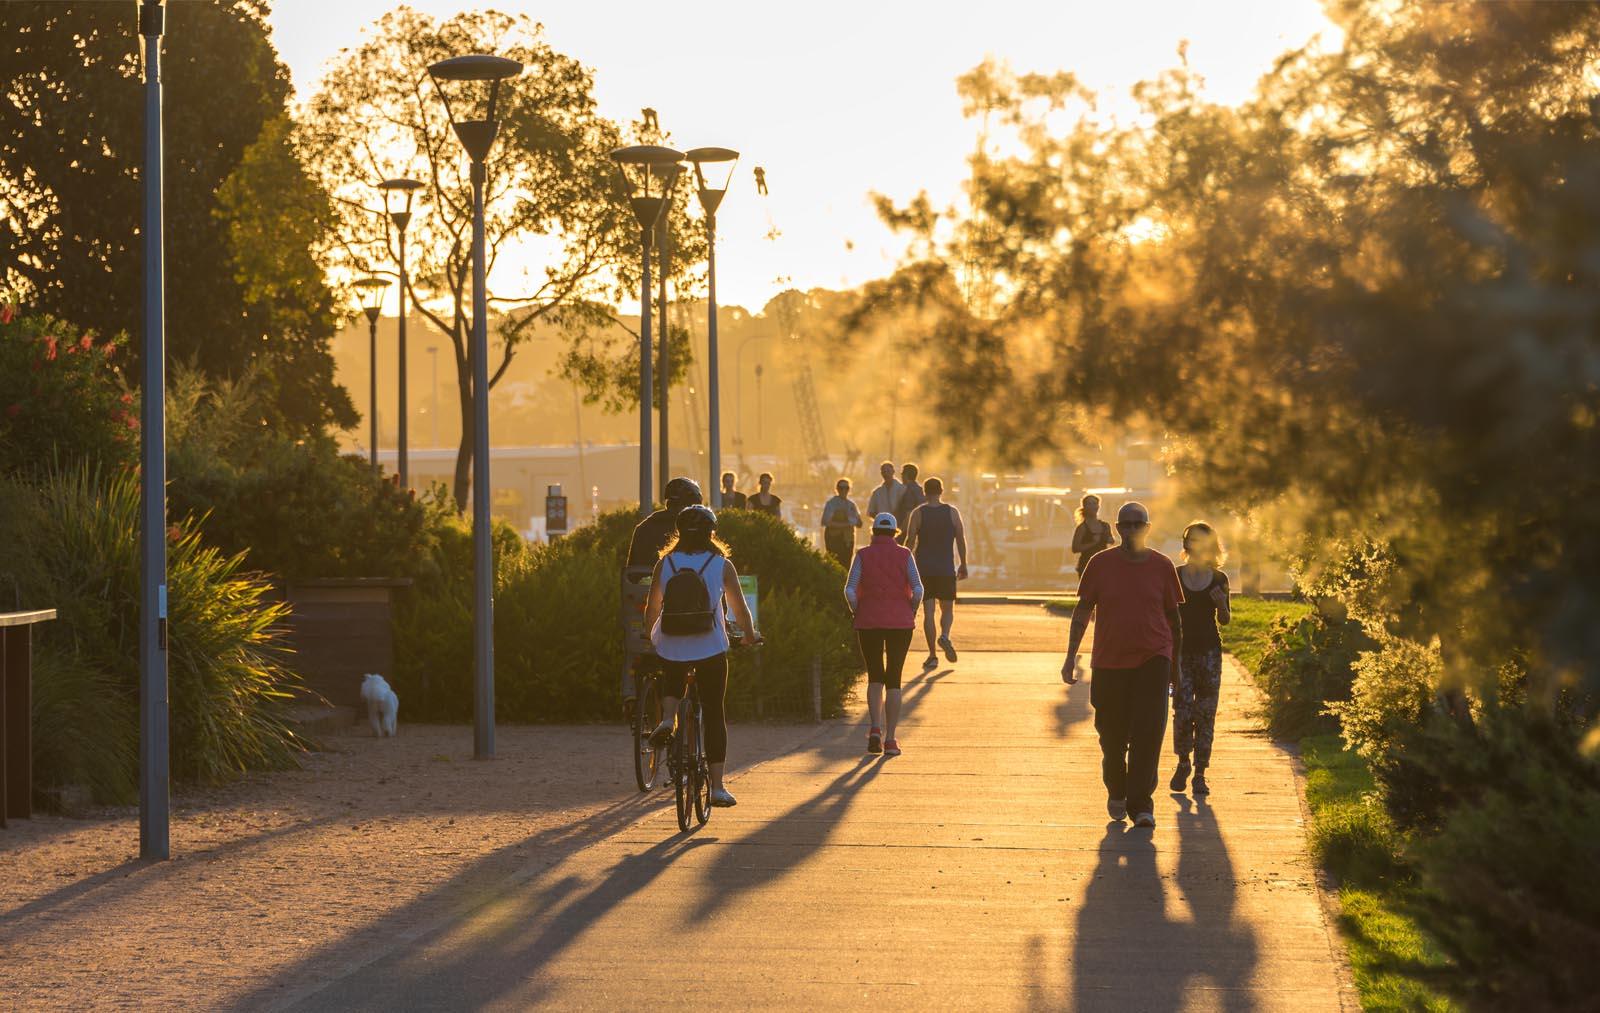 People walking through Bicentennial park in Sydney at sunset